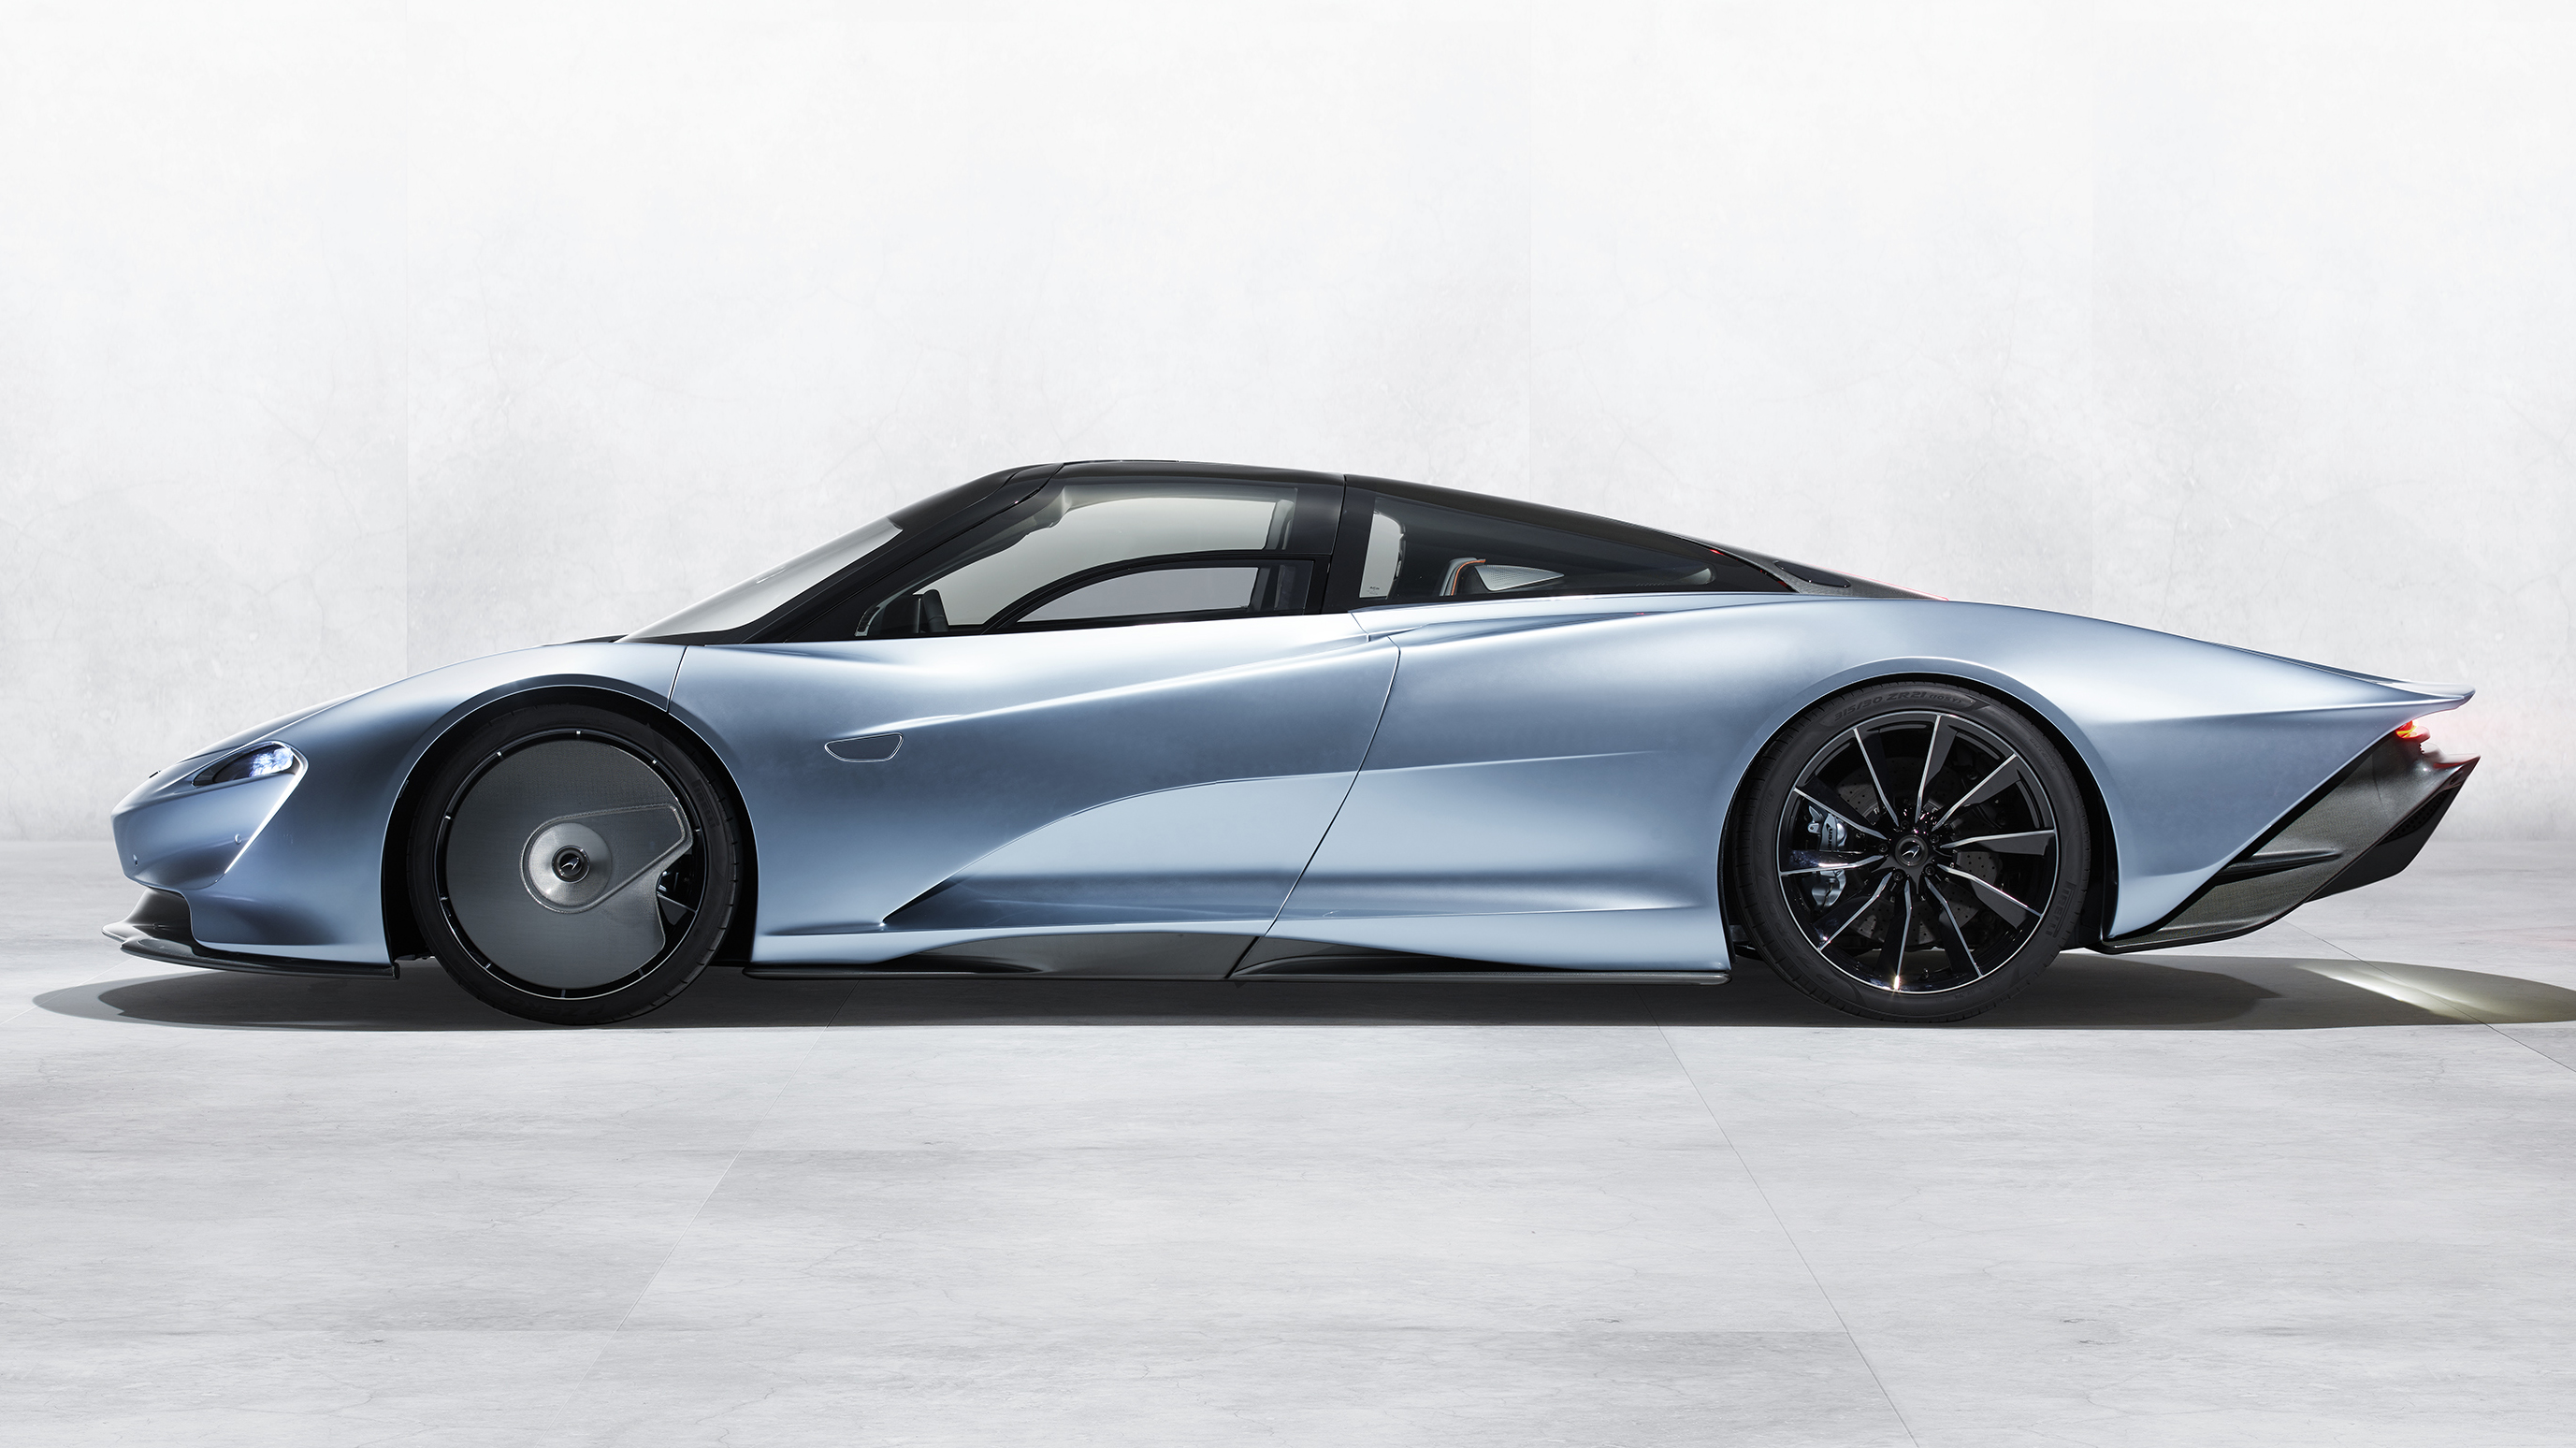 McLaren Speedtail exterior - Side Profile